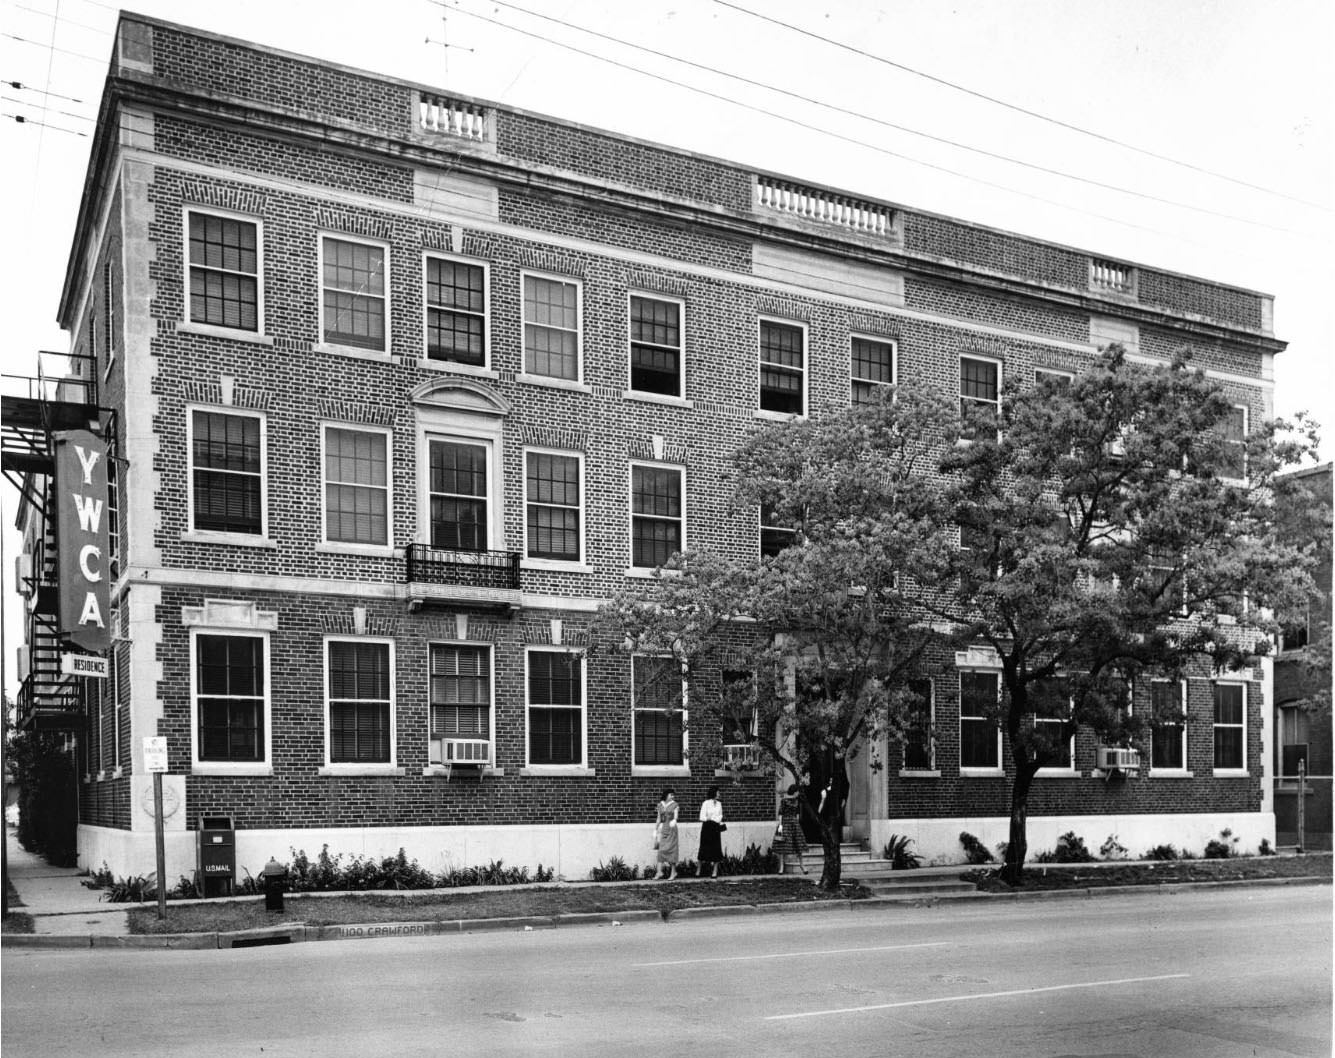 YWCA building, 1930s.